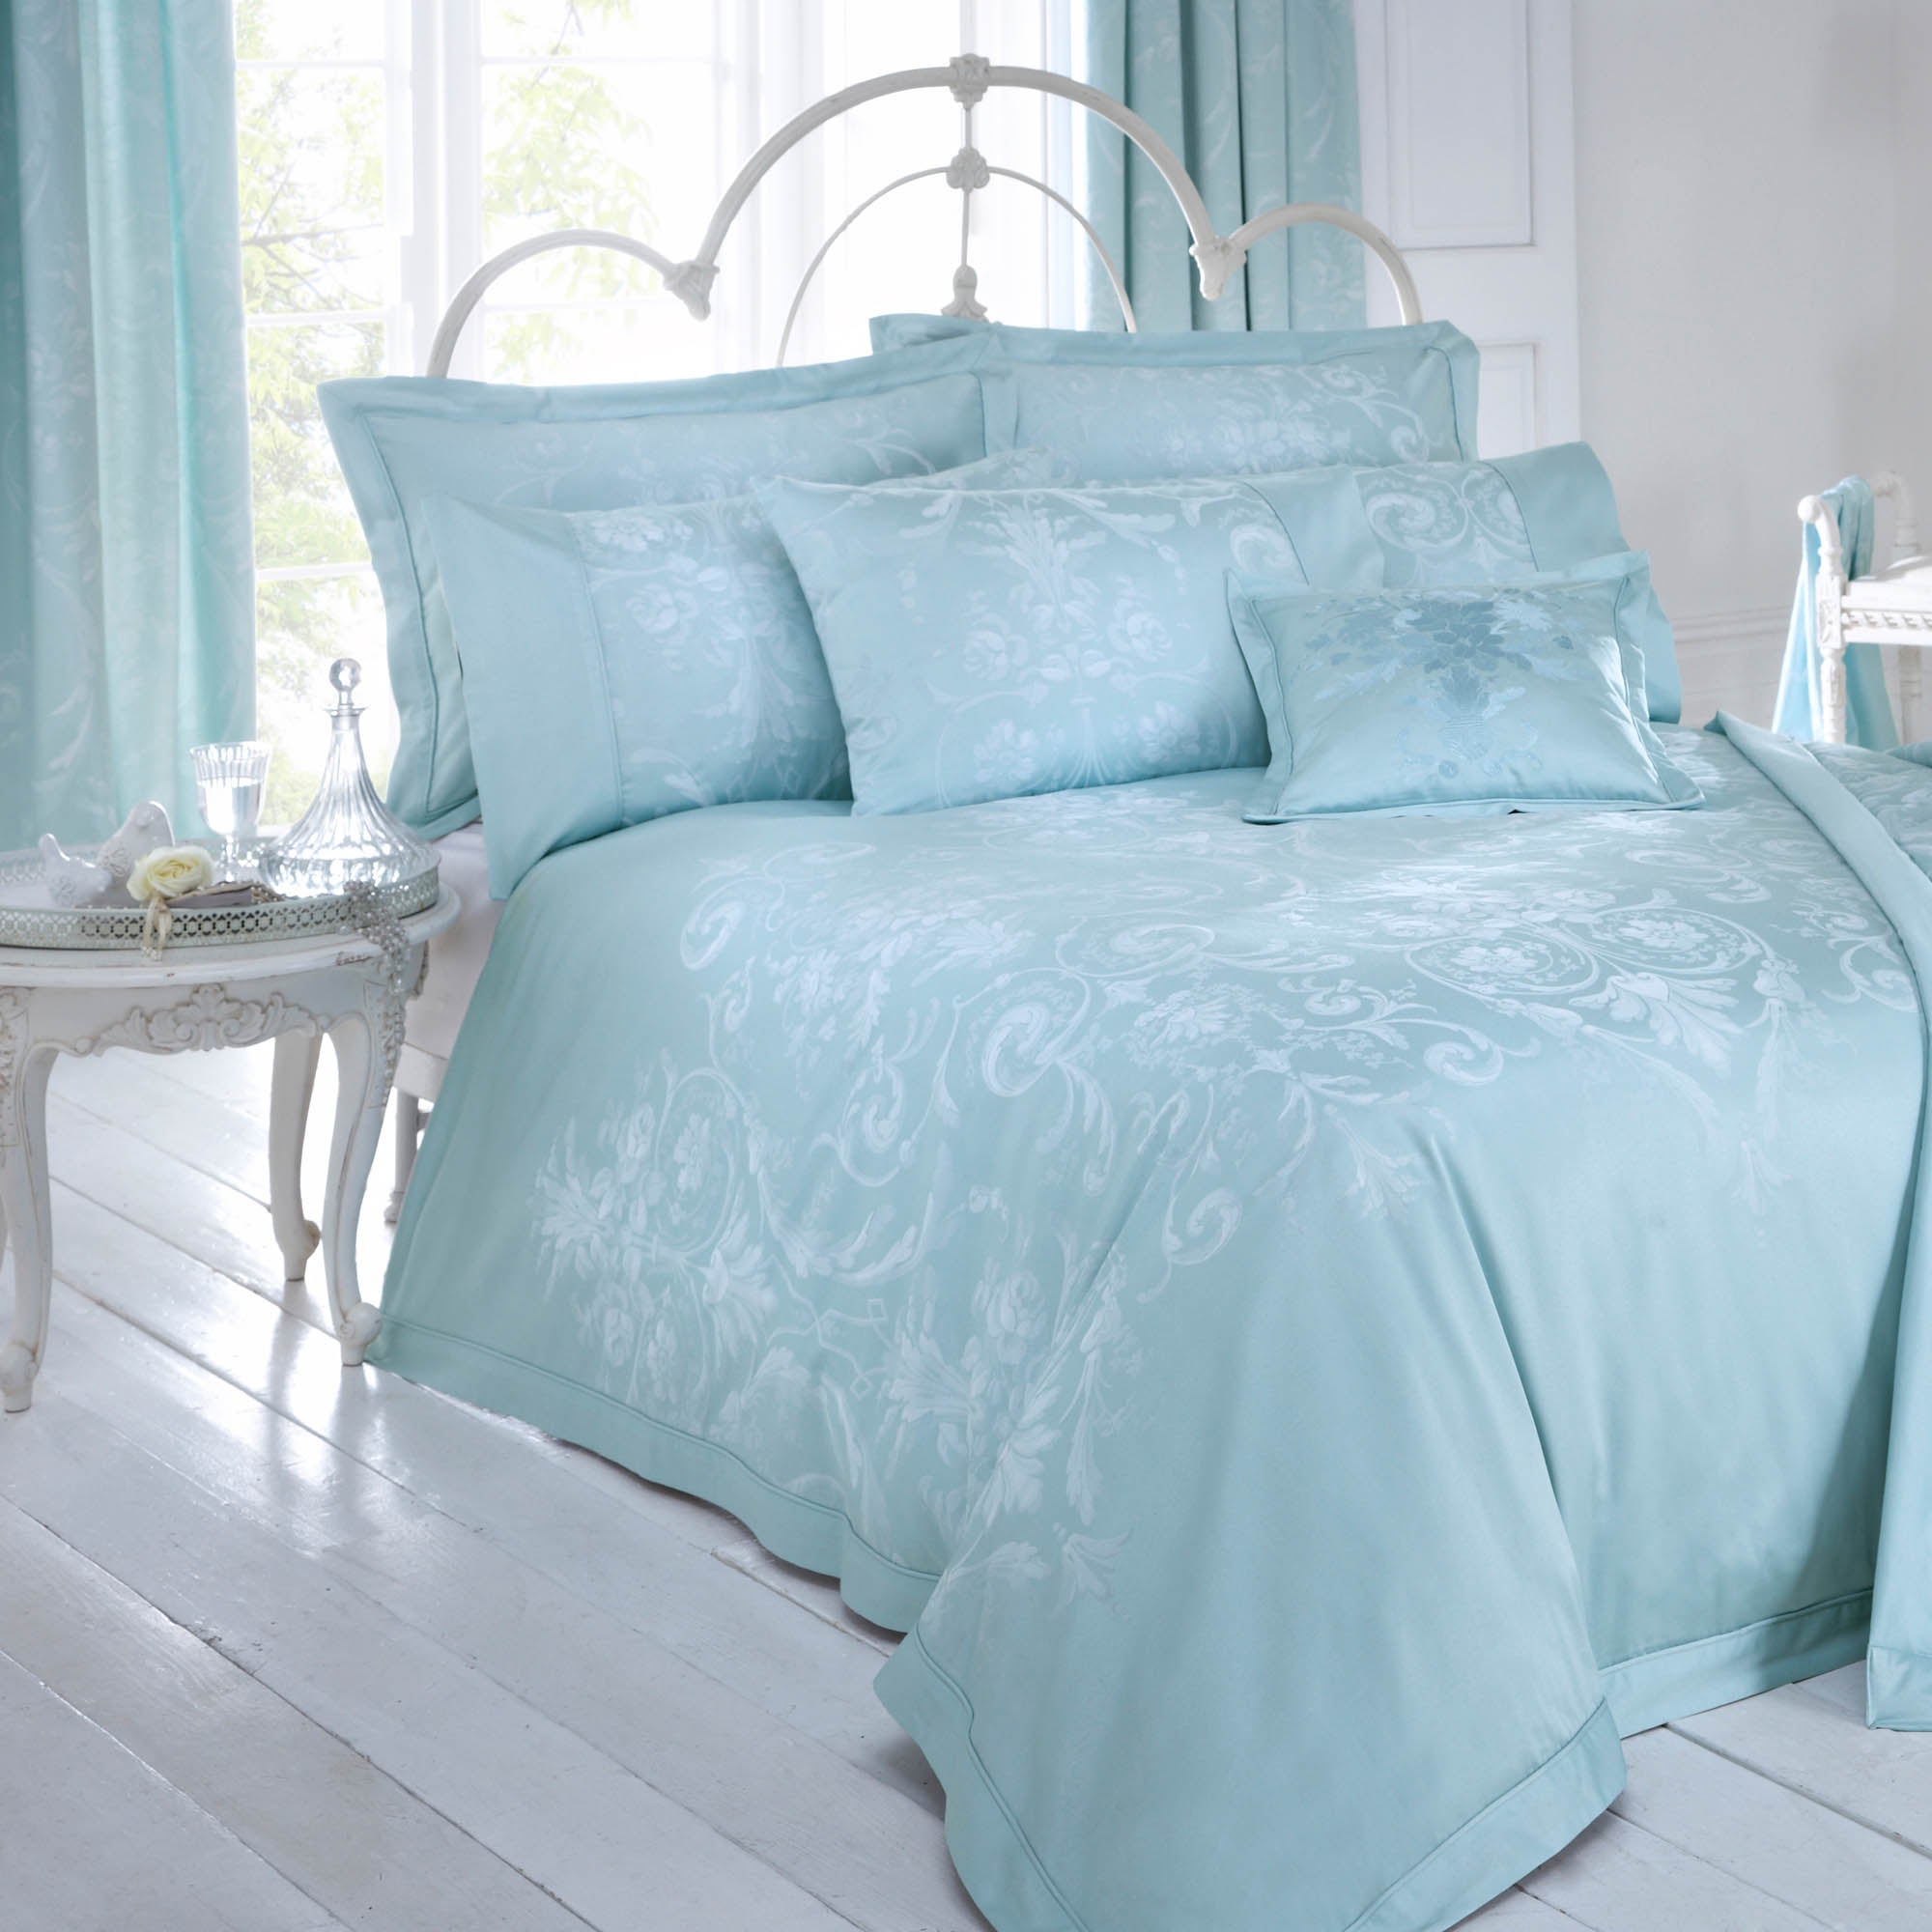 Buy cheap Duck egg blue bedding - compare Home Textiles 